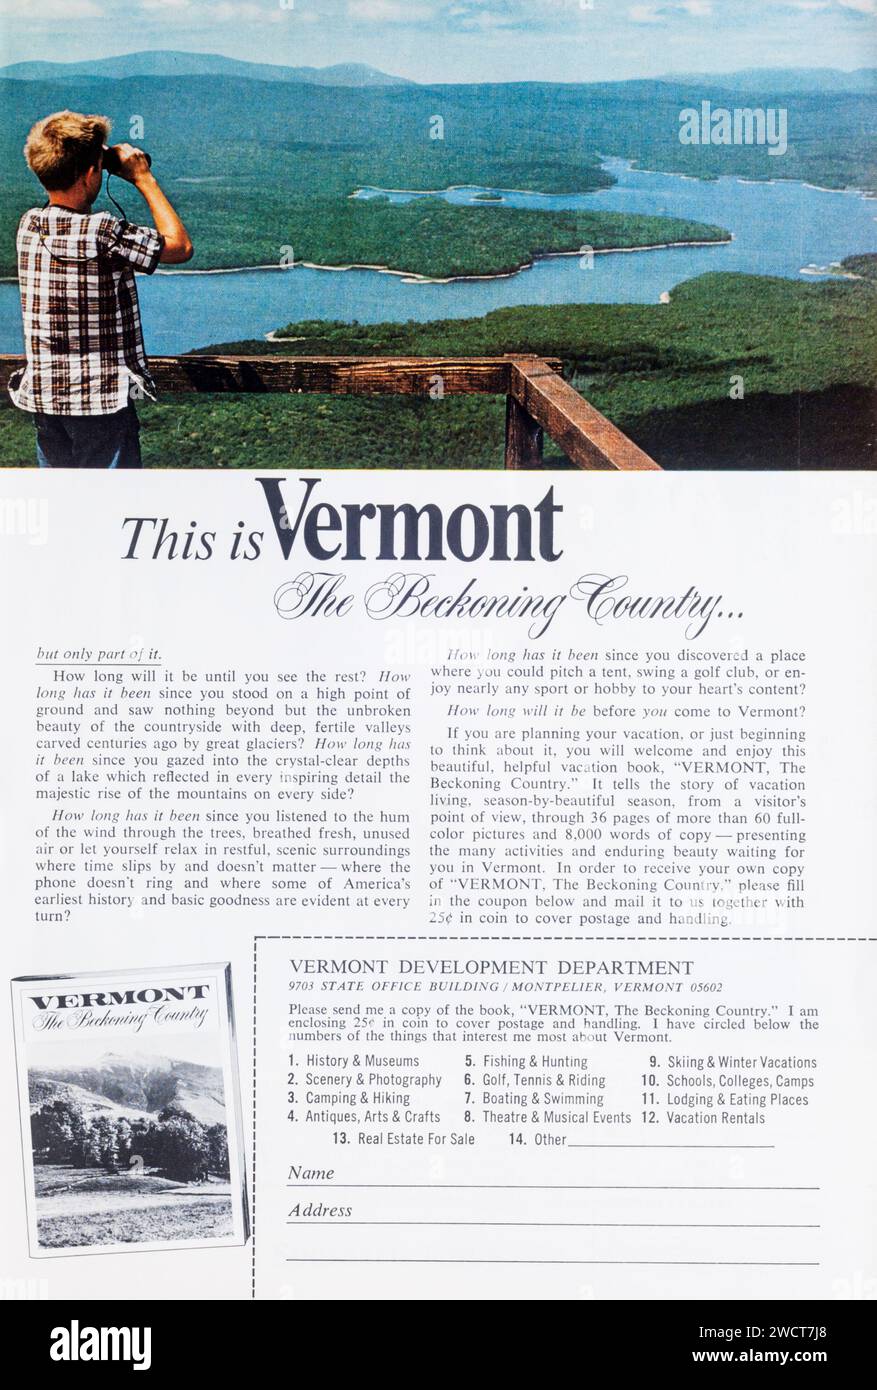 1966 magazine advert advertising Vermont as a vacation destination. Stock Photo